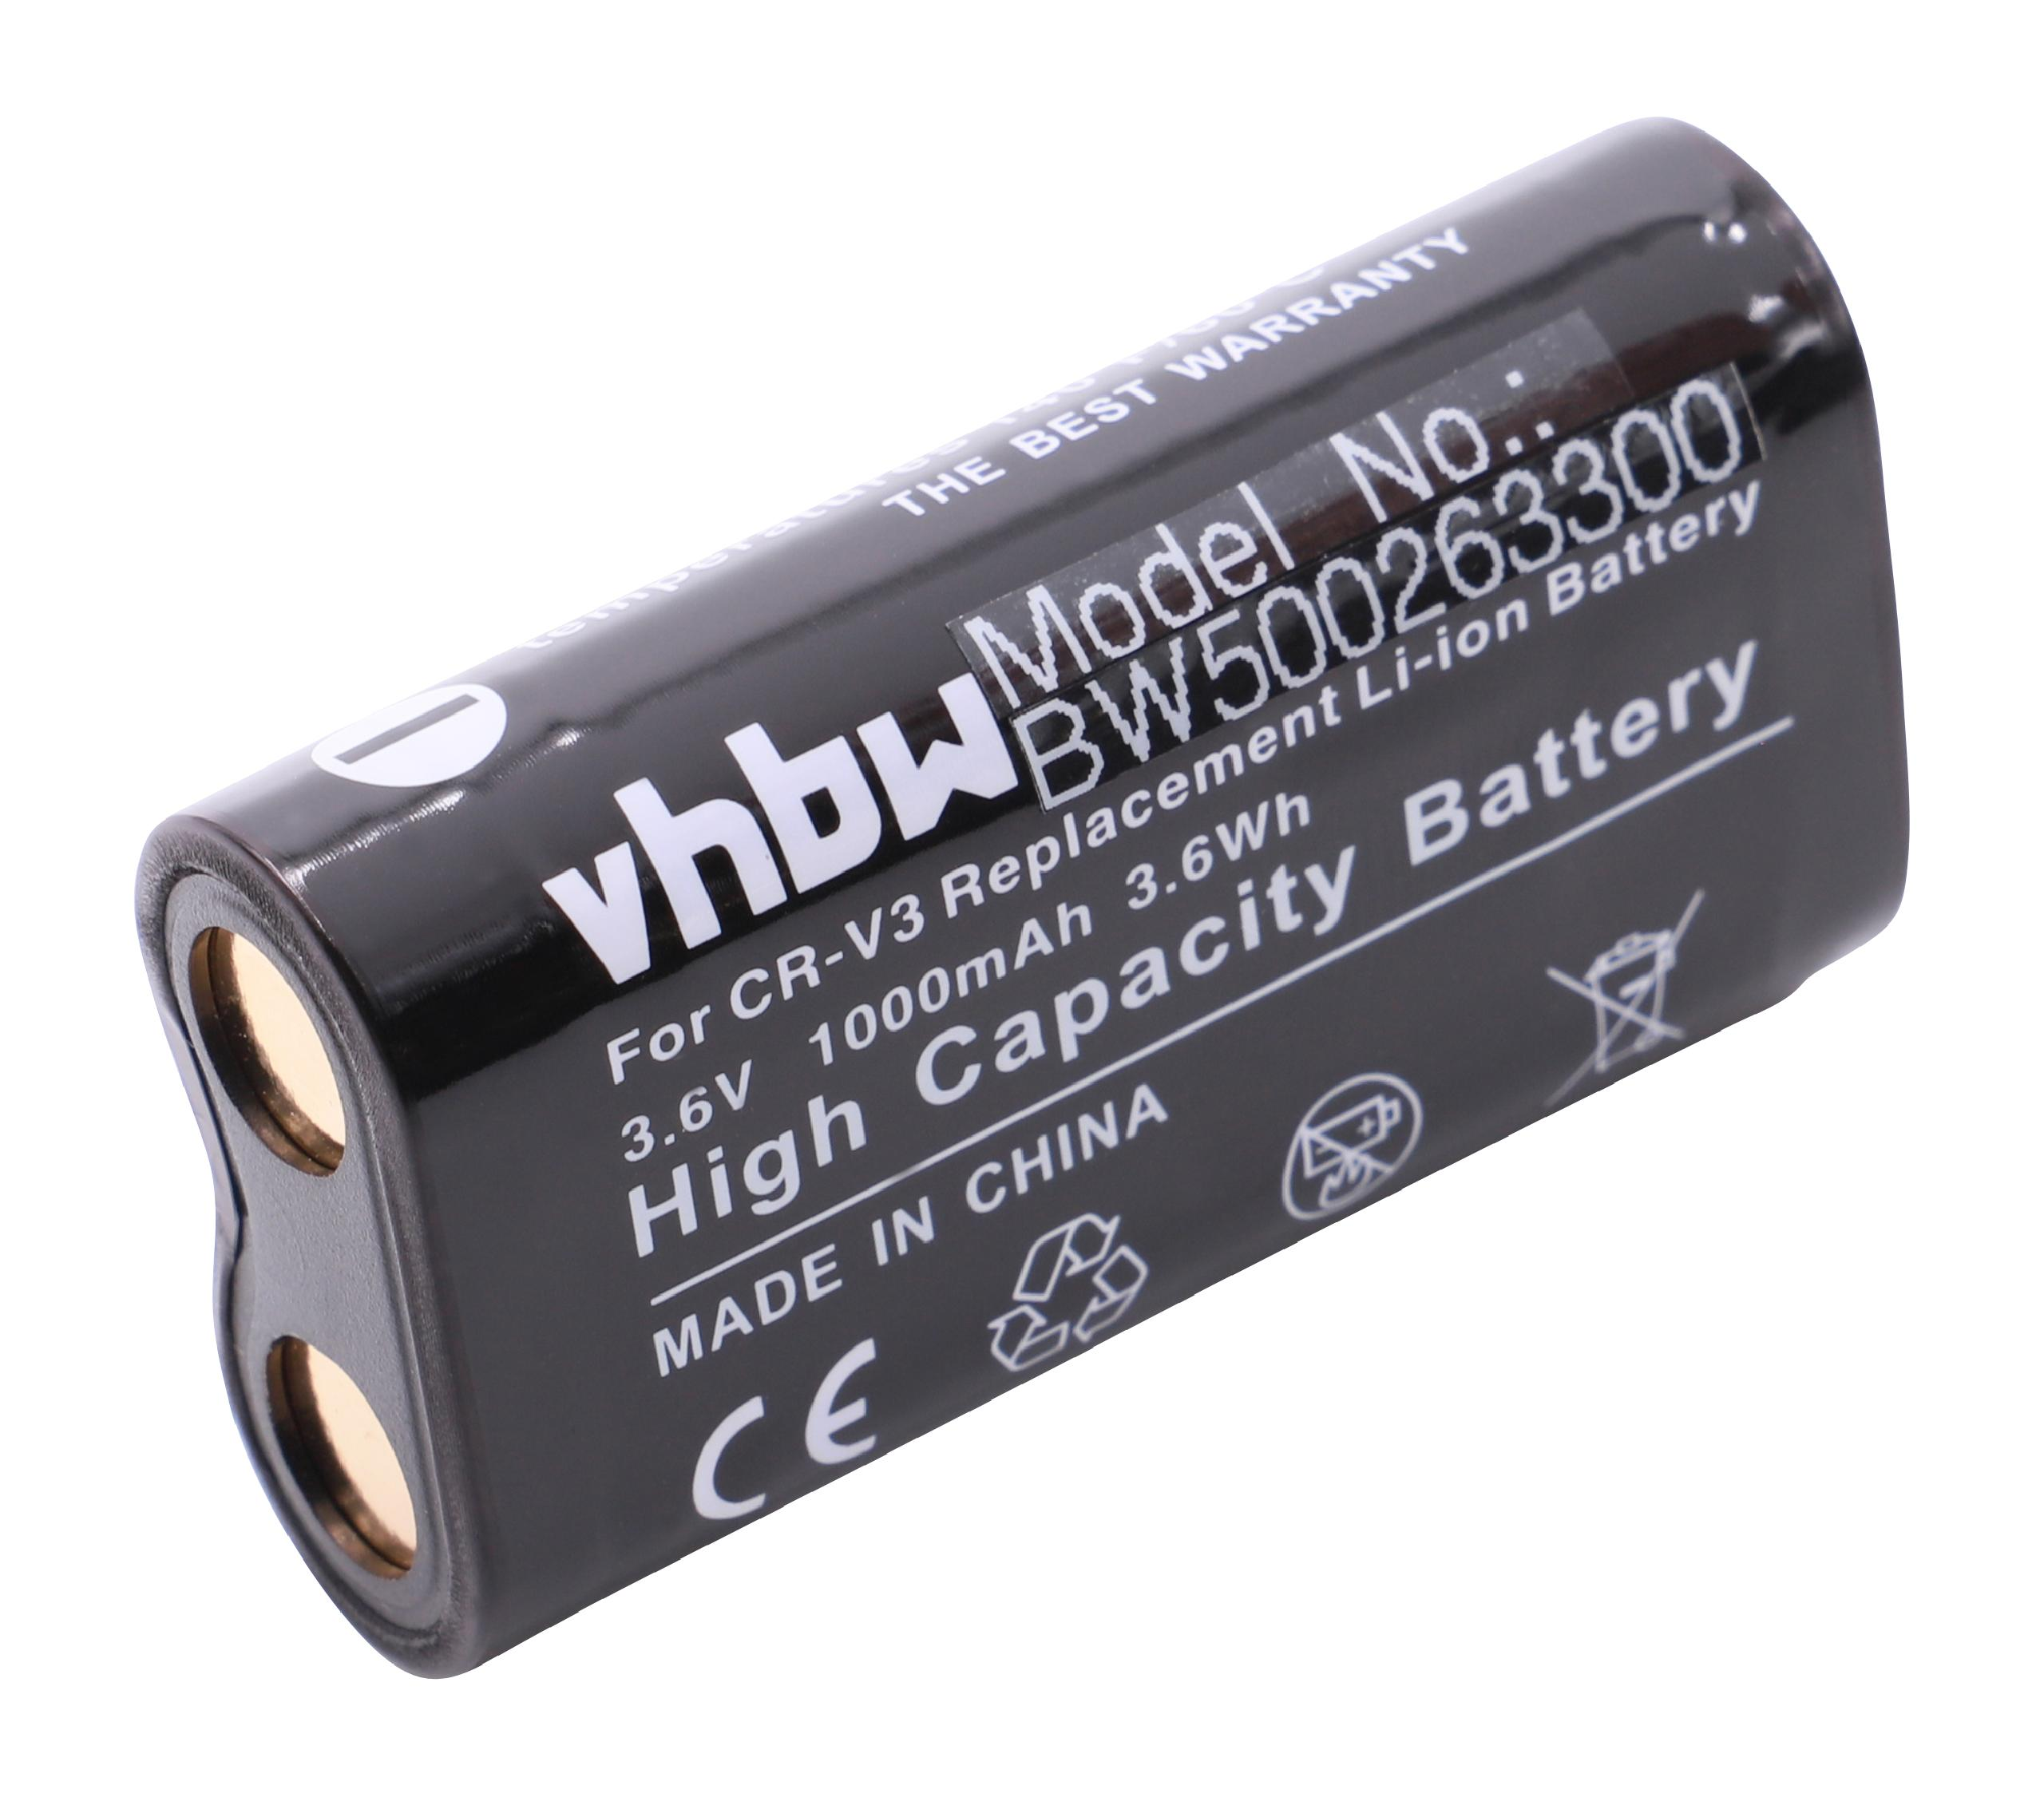 VHBW kompatibel mit Epson 800 Kamera, 900z, 700, Volt, - Akku 850z, 750z, 3.6 Li-Ion 1000 2100z, 3100z, 3000z